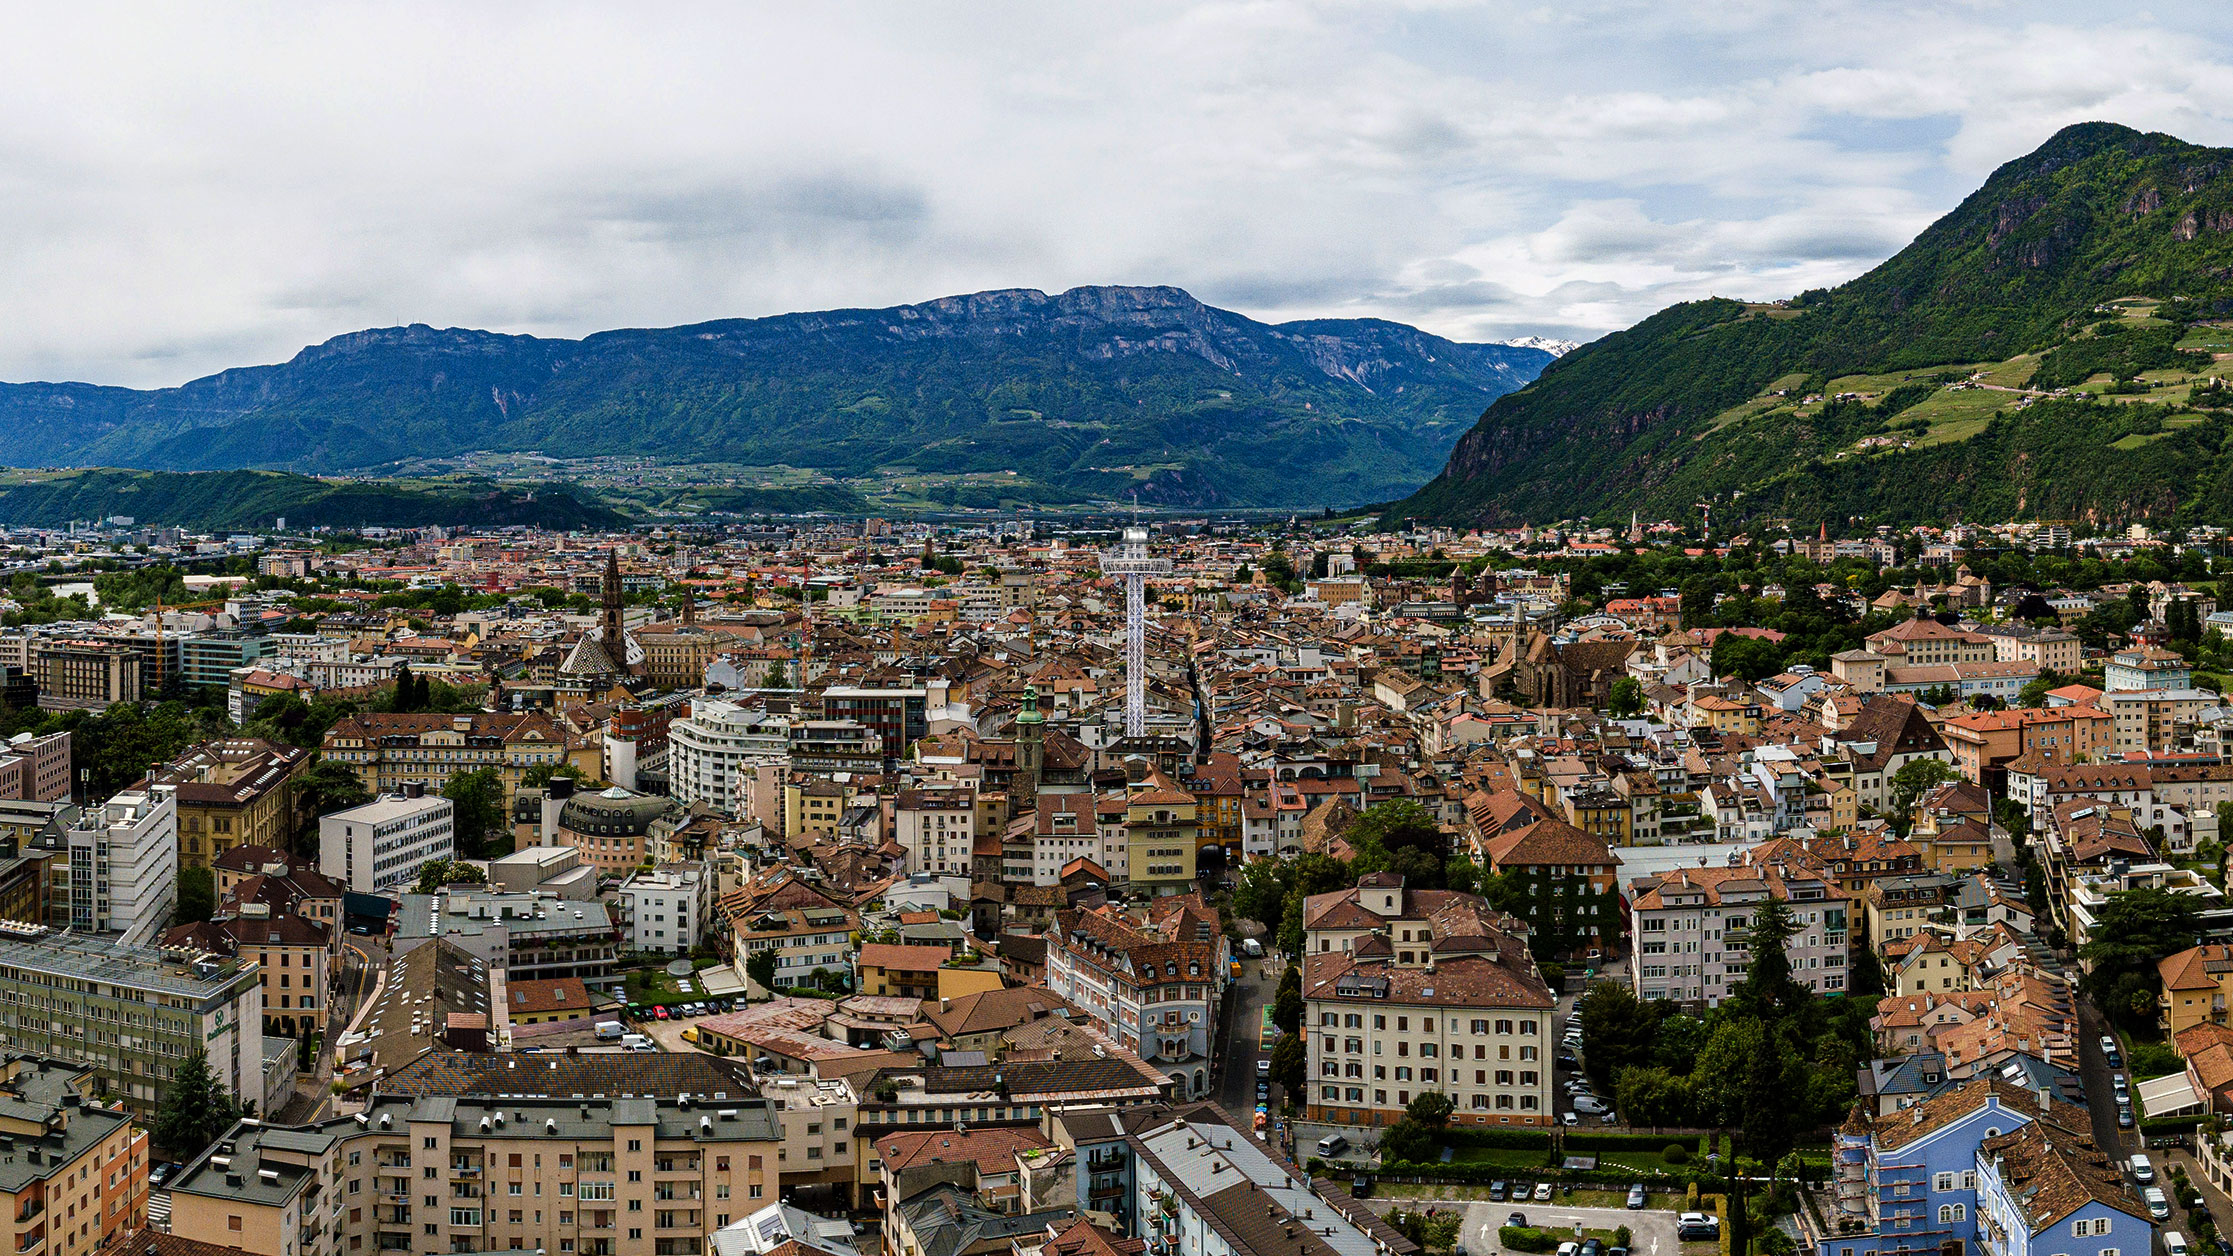 Torre panoramica a Bolzano, le mie impressioni